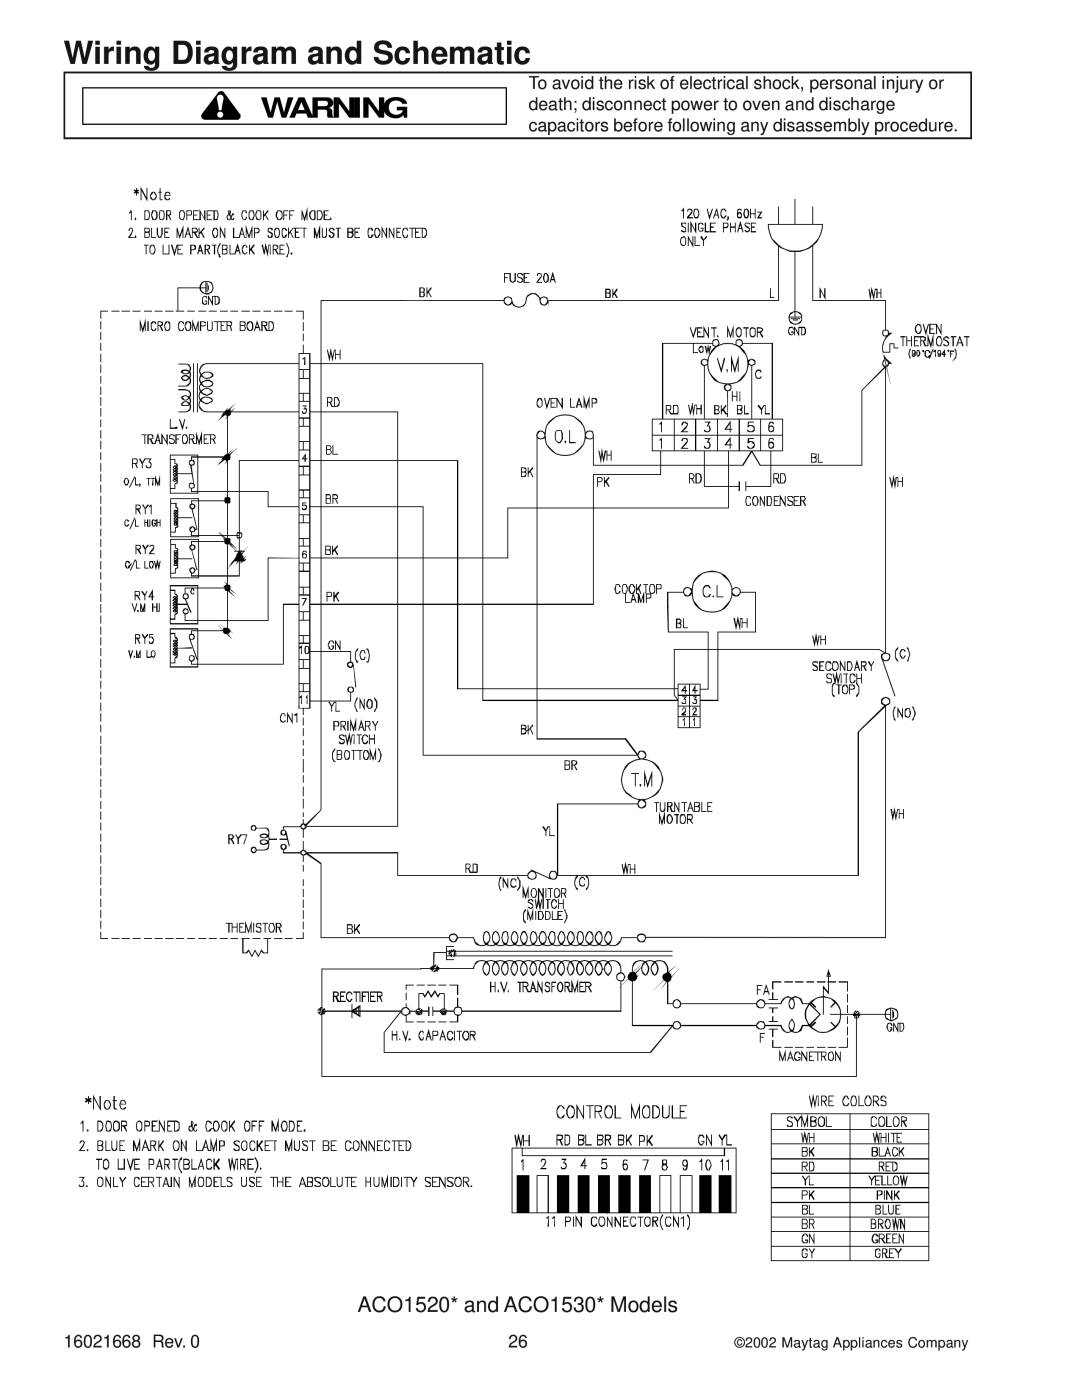 Maytag ACO1840AC, ACO1560AB Wiring Diagram and Schematic, ACO1520* and ACO1530* Models, Maytag Appliances Company 